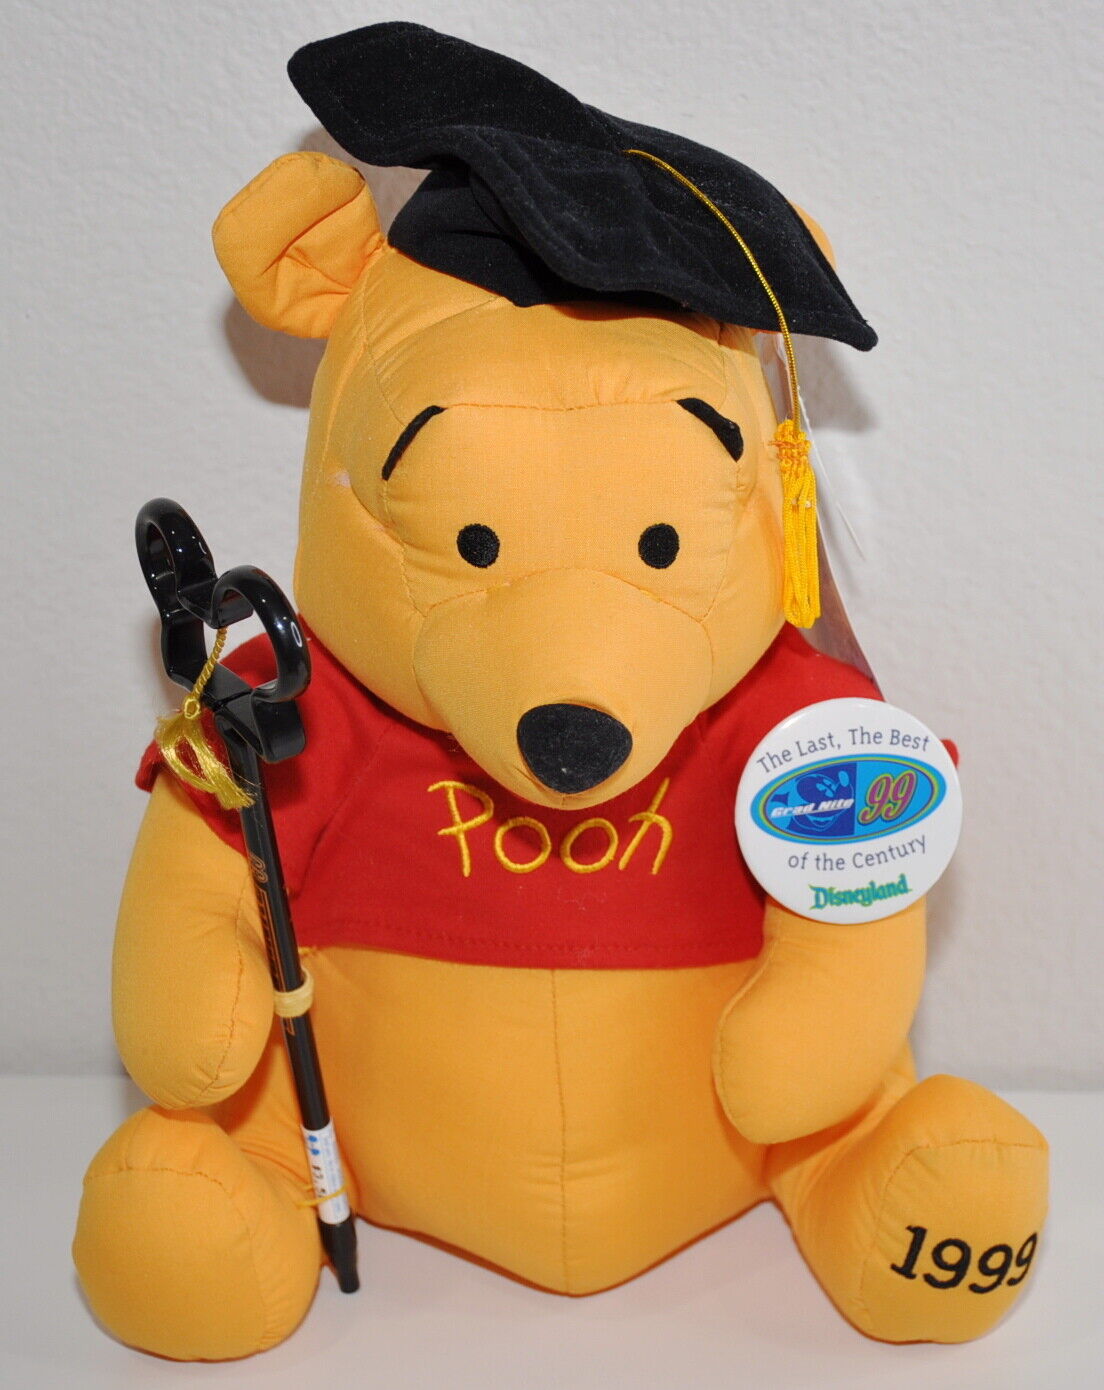 Disney Winnie the Pooh 1999 Graduation Plush Grad Nite 99 Disneyland Vintage 